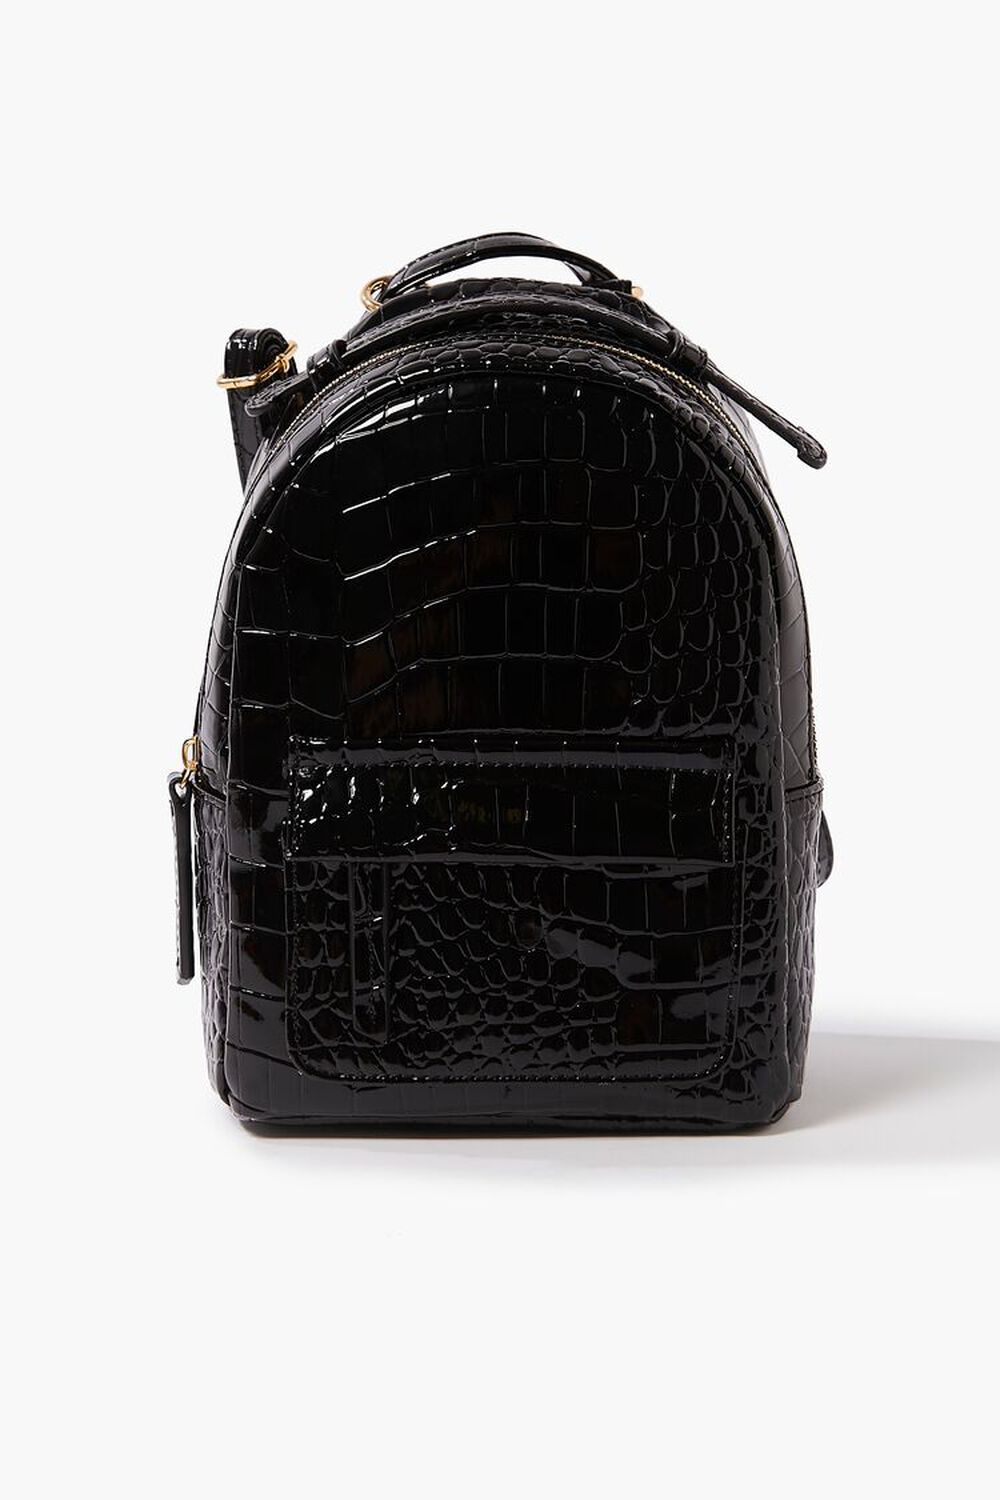 BLACK Faux Croc Leather Backpack, image 1